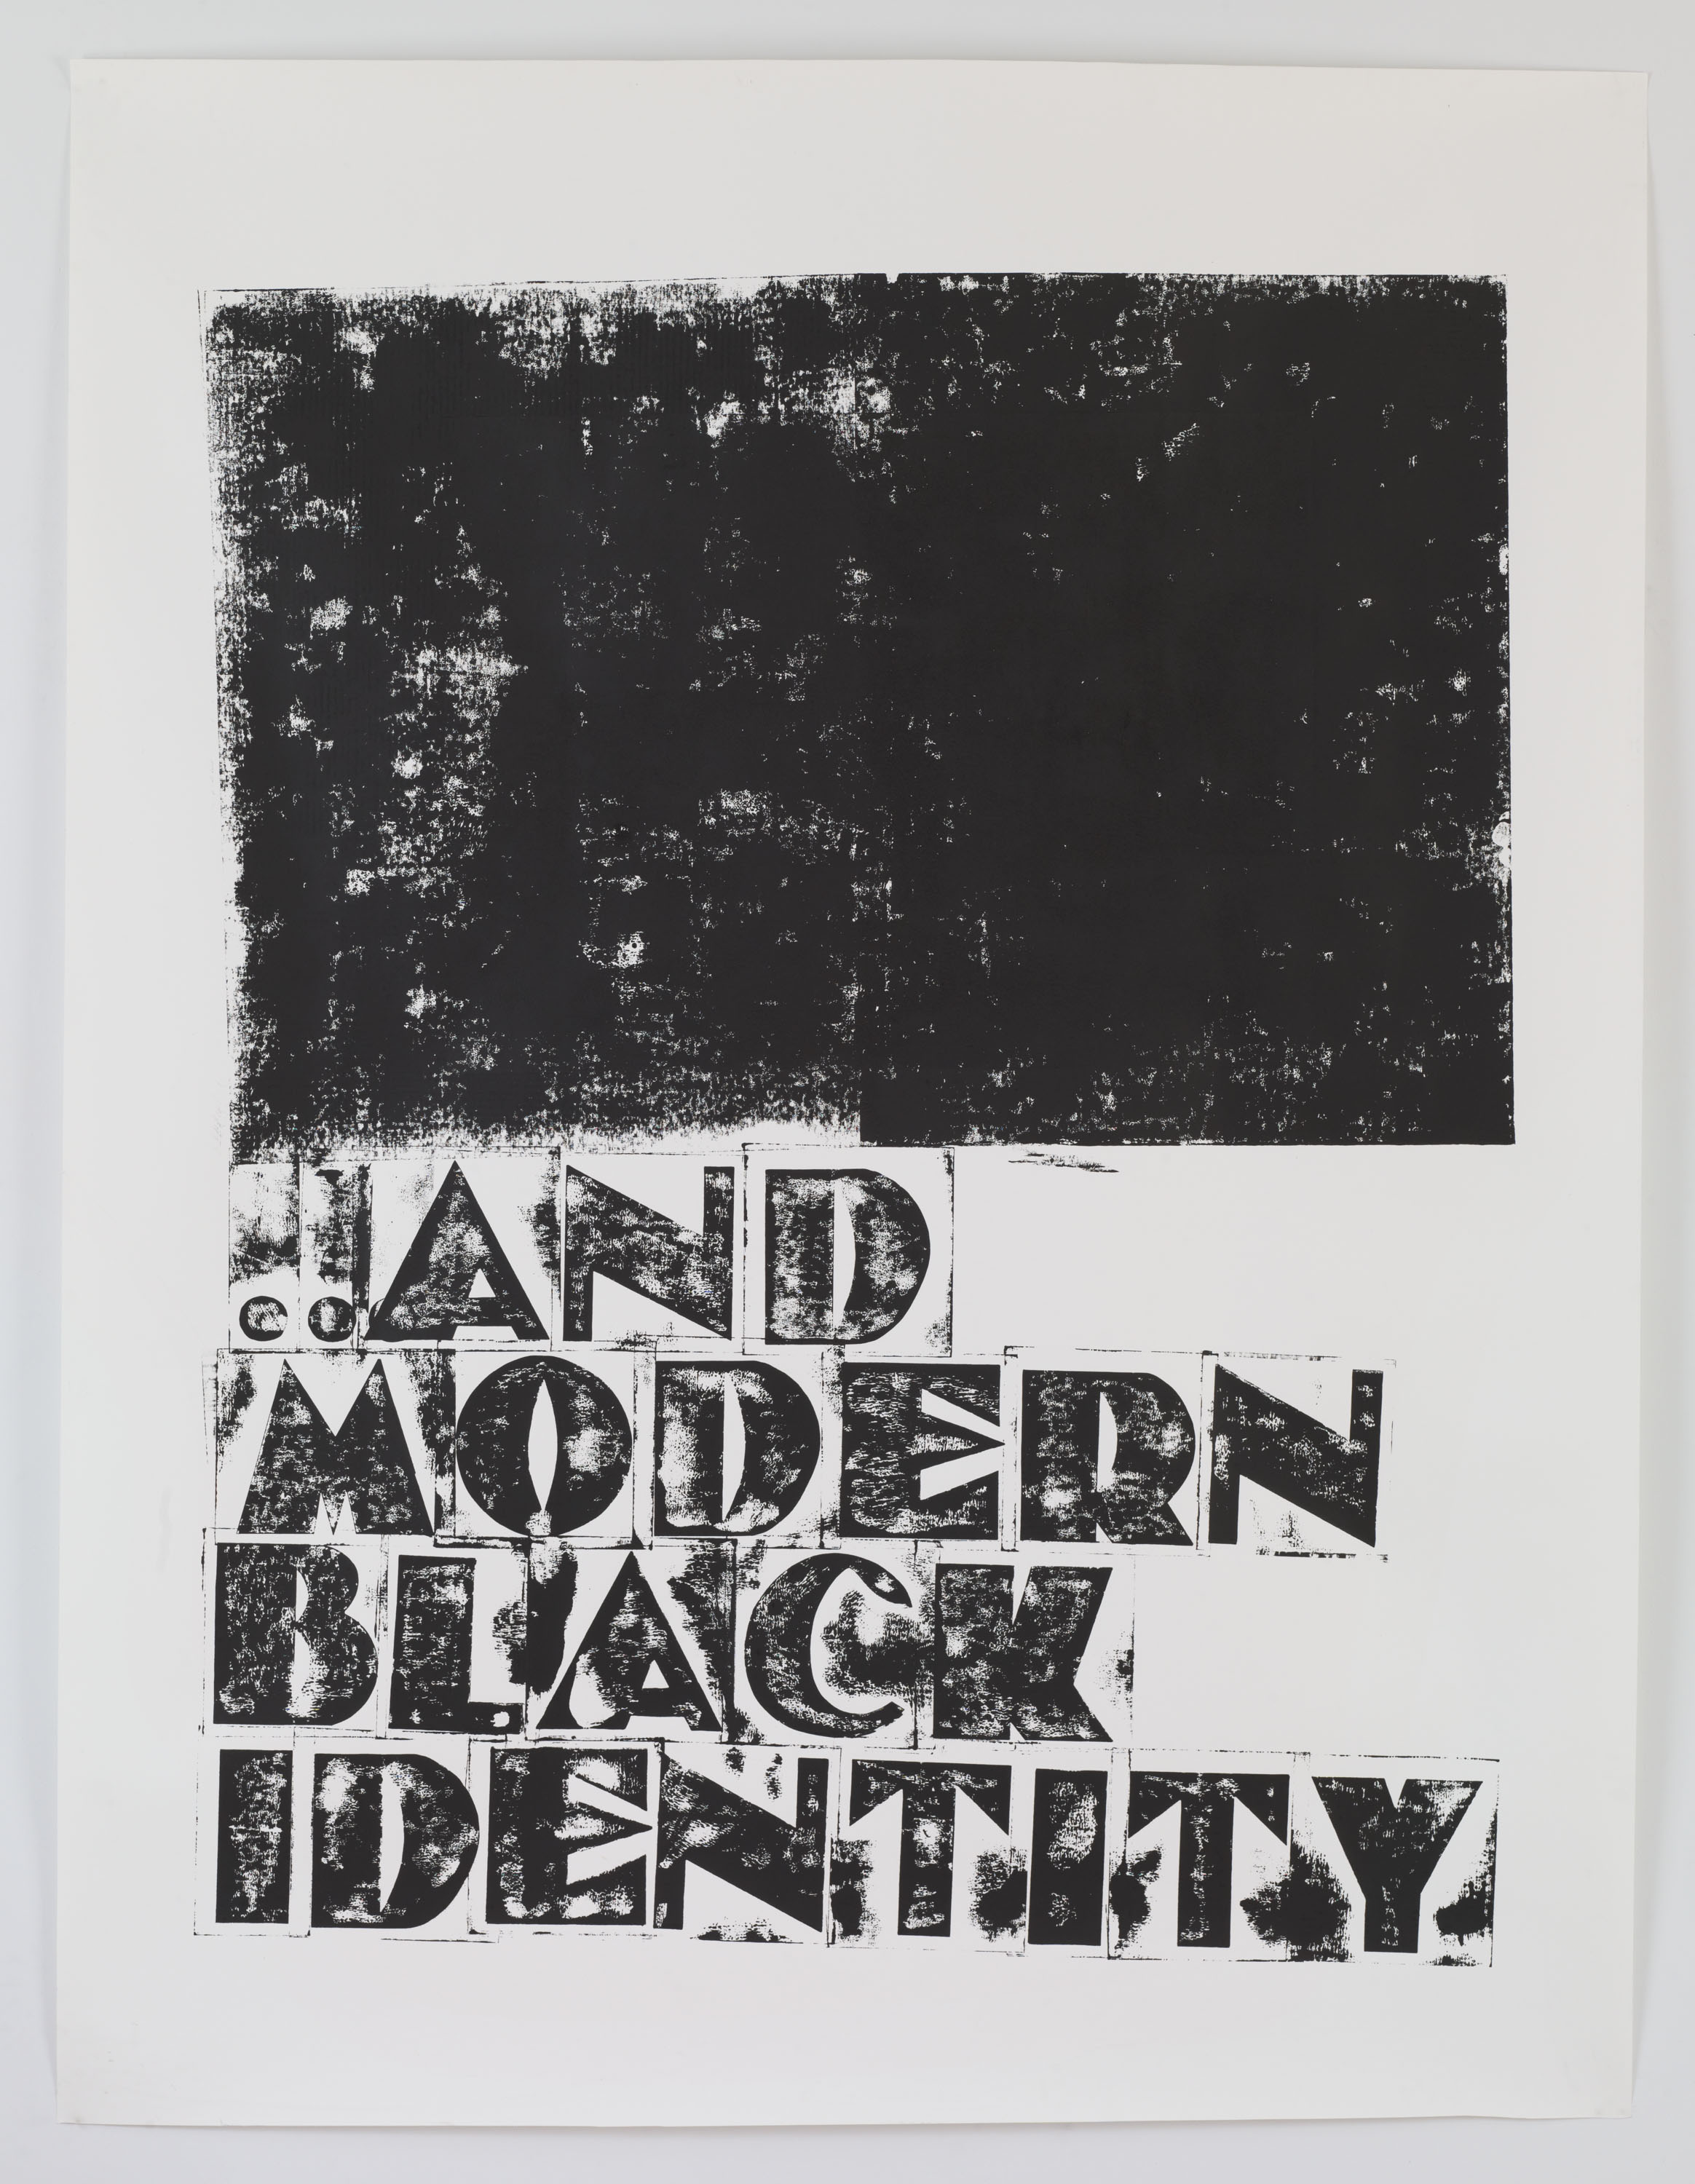 ... (And Modern Black Identity), 2010